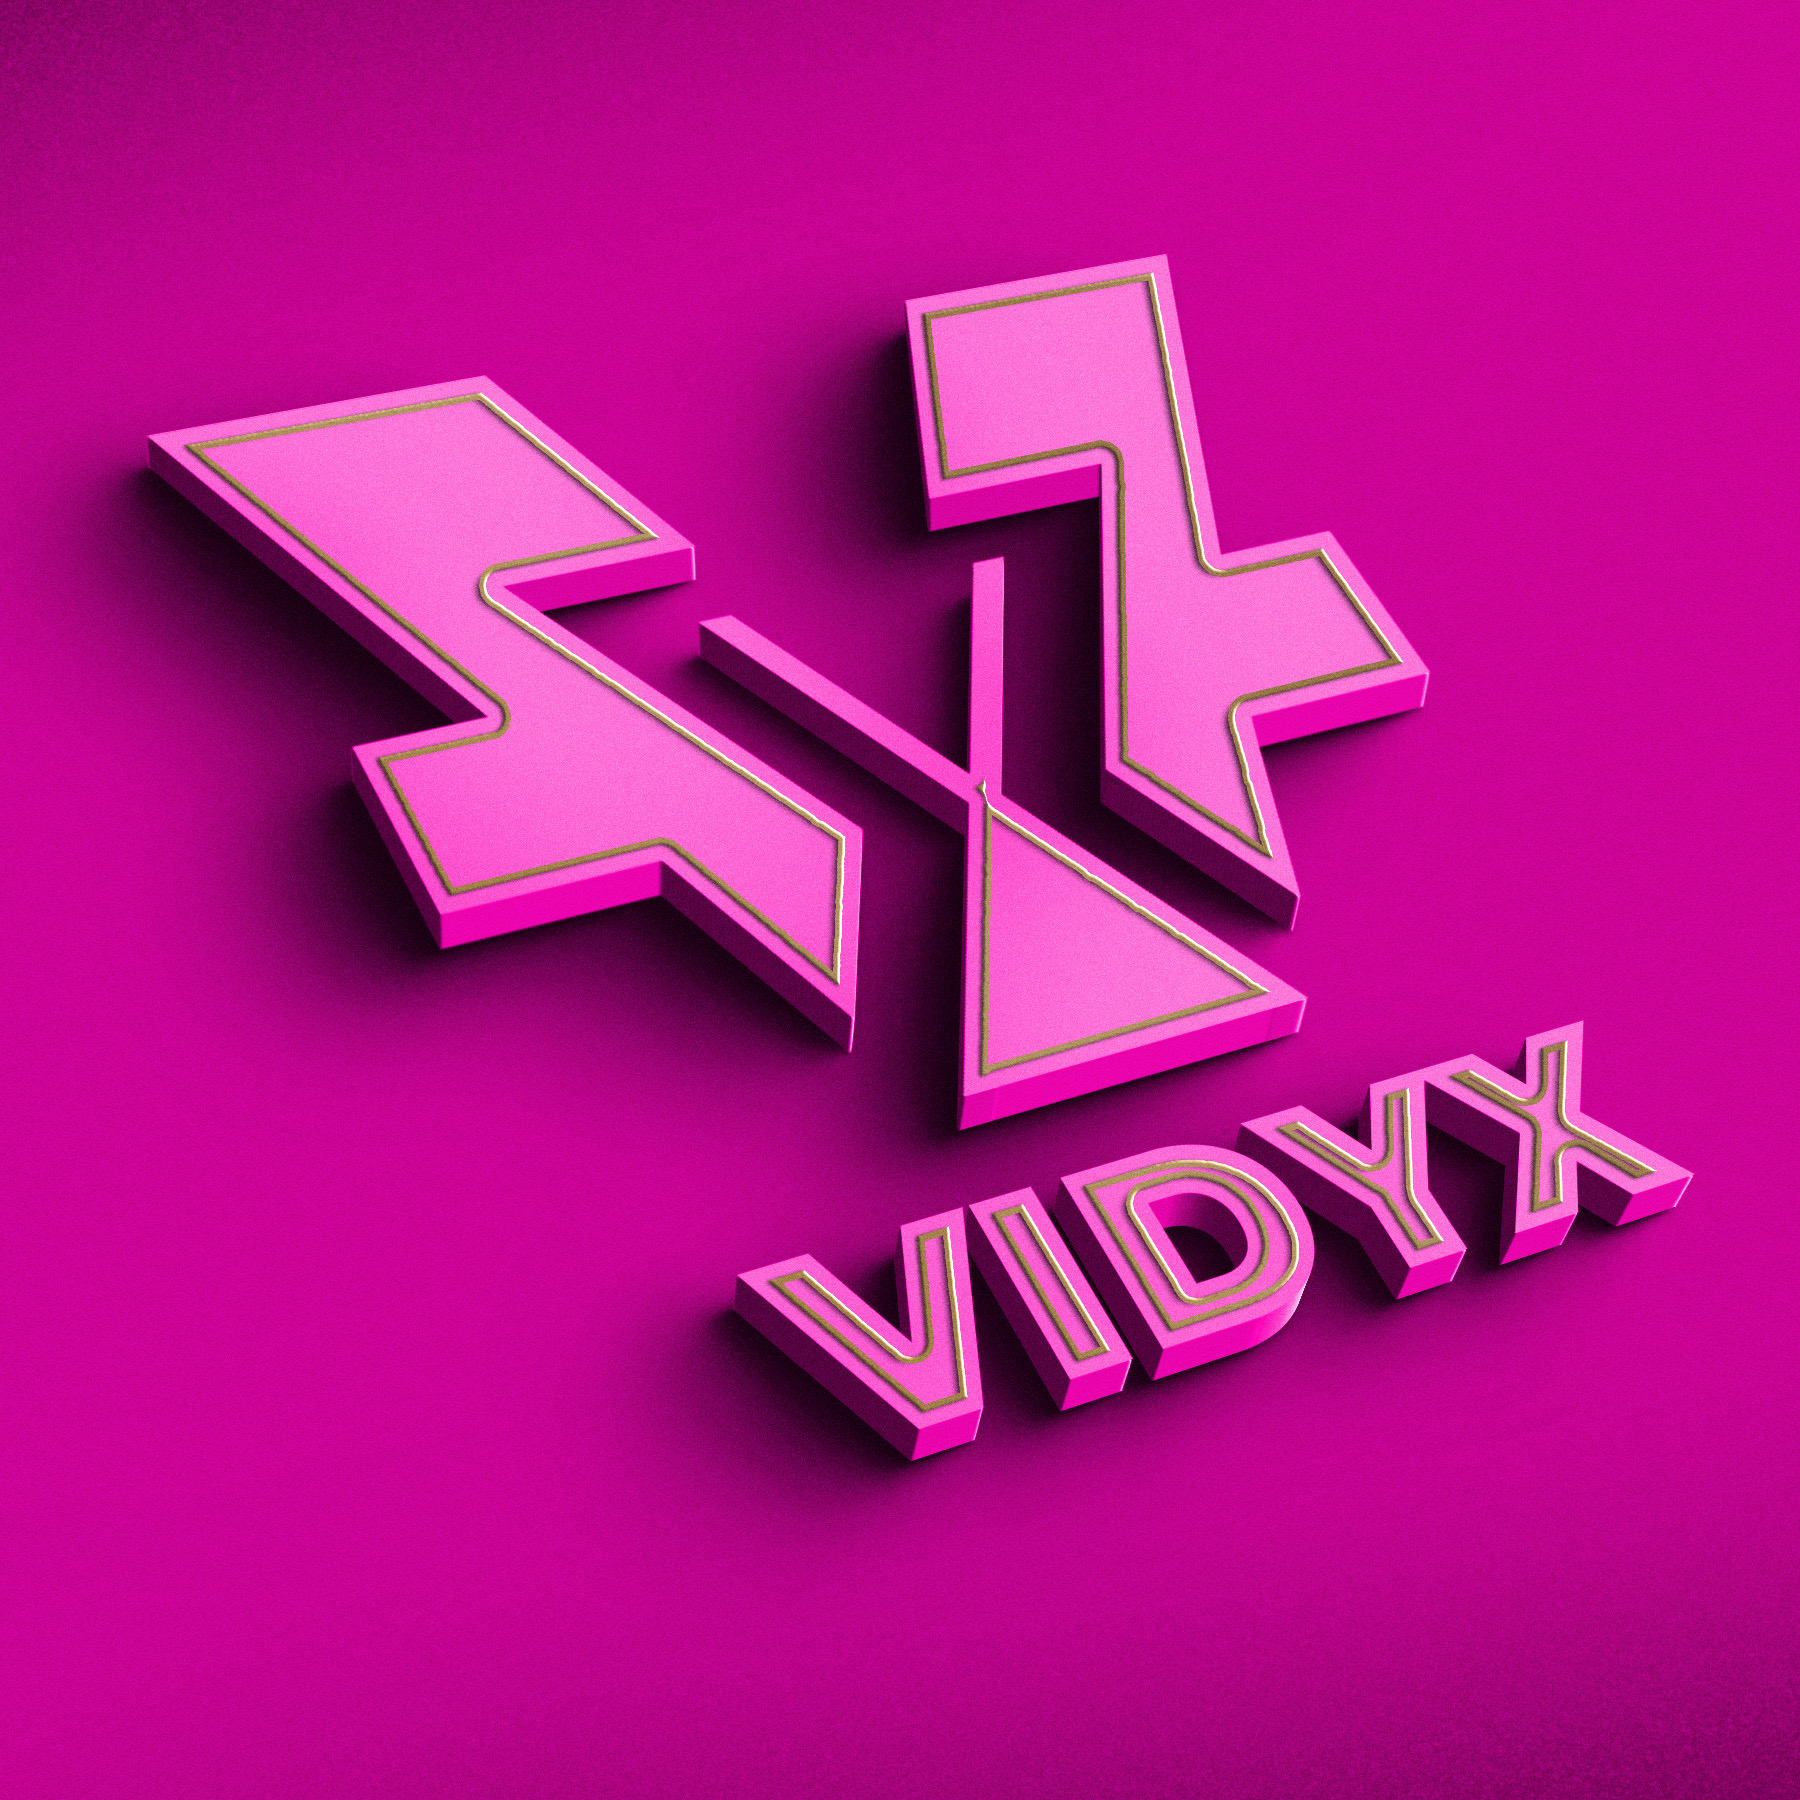 Aset Kripto VidyX Teratas untuk Dibeli dan Ditahan Selamanya. VIDYX proyek berkinerja terbaik. Kolaborasi Vidy dan Binance untuk Membangun Platform NFT.